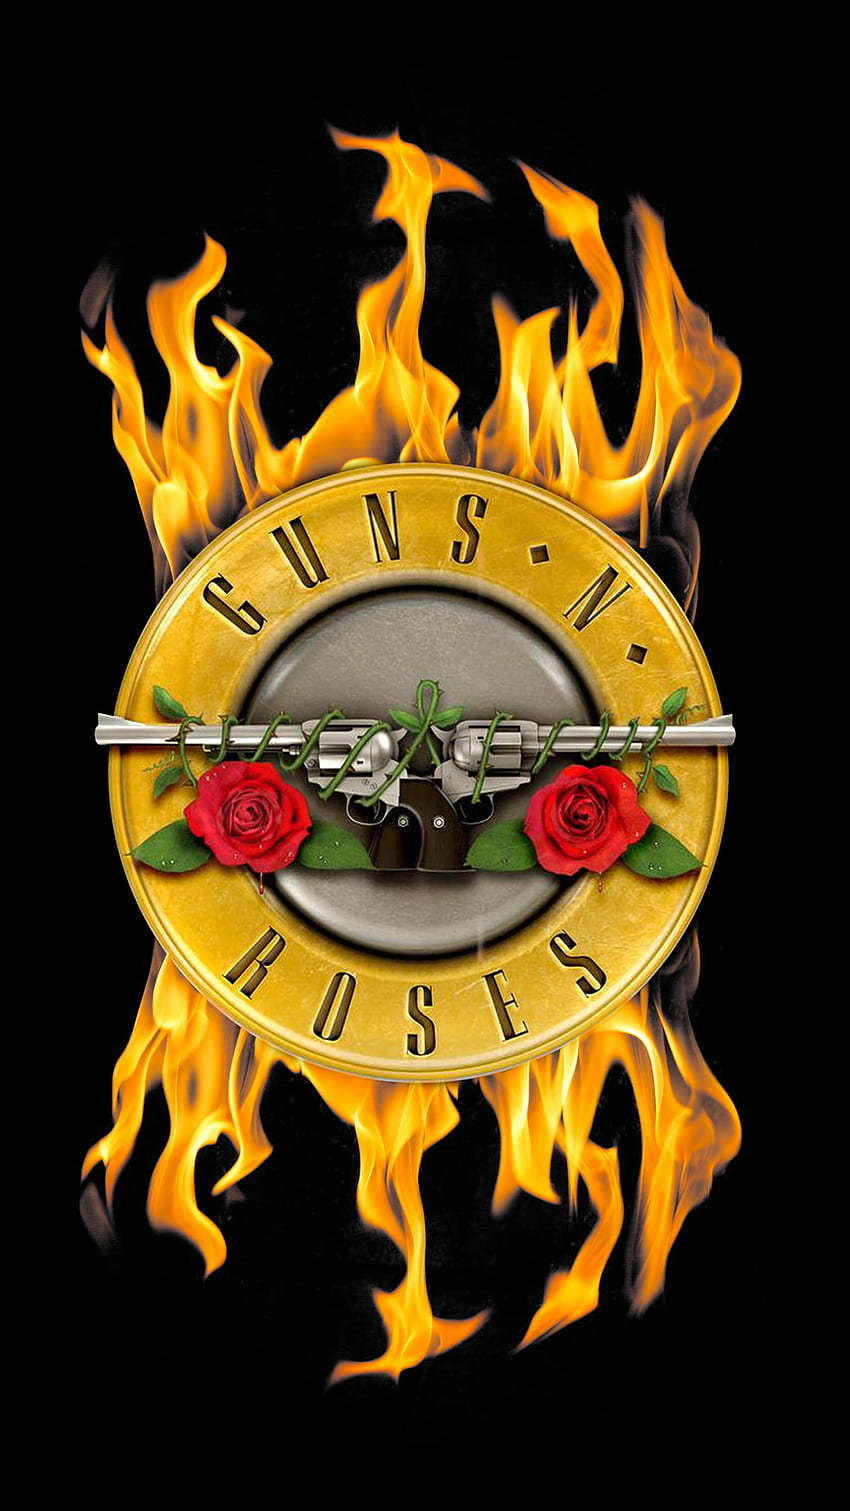 Guns N 'Roses, lencana, pistol, simbol, Guns N' Roses, api, logo, mawar, pita wallpaper ponsel HD